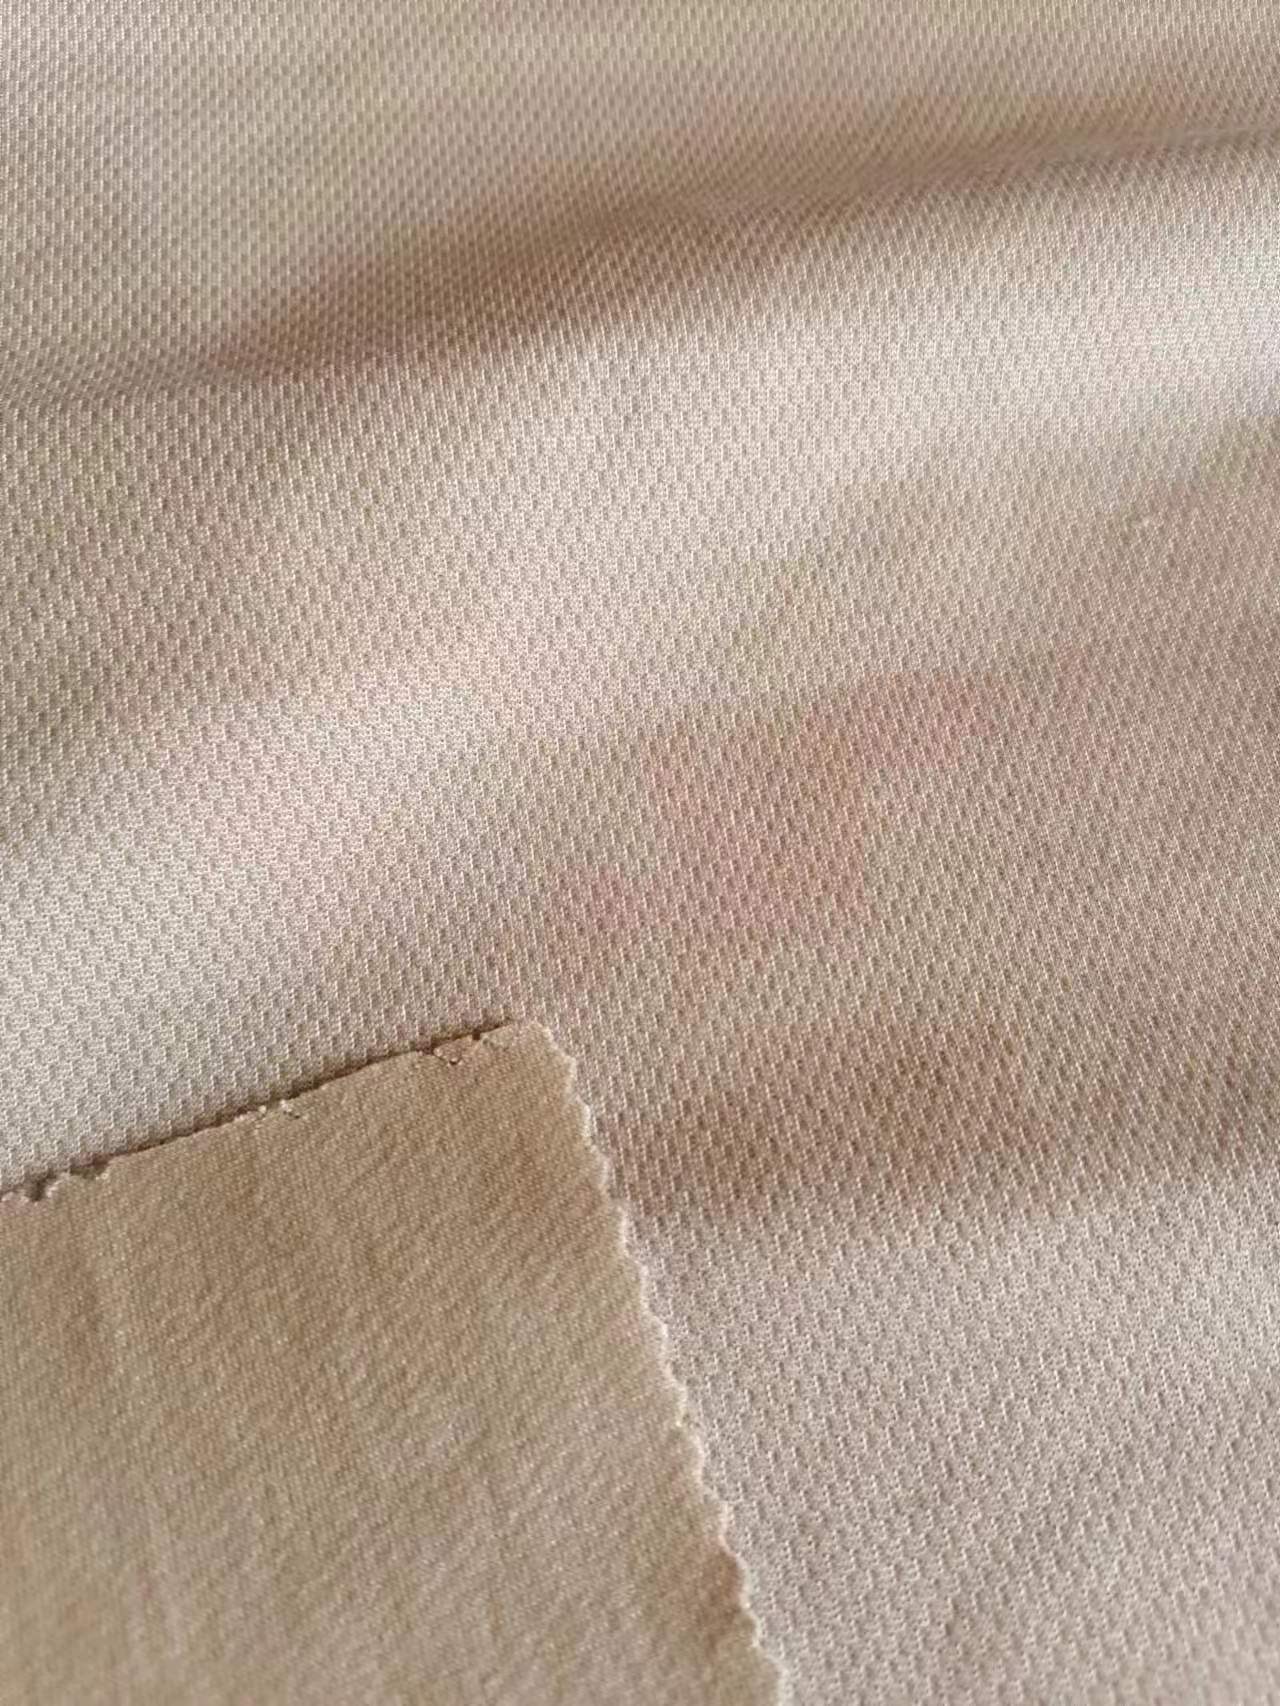 rayon nylon spandex jacquard plain dyed fabric 2